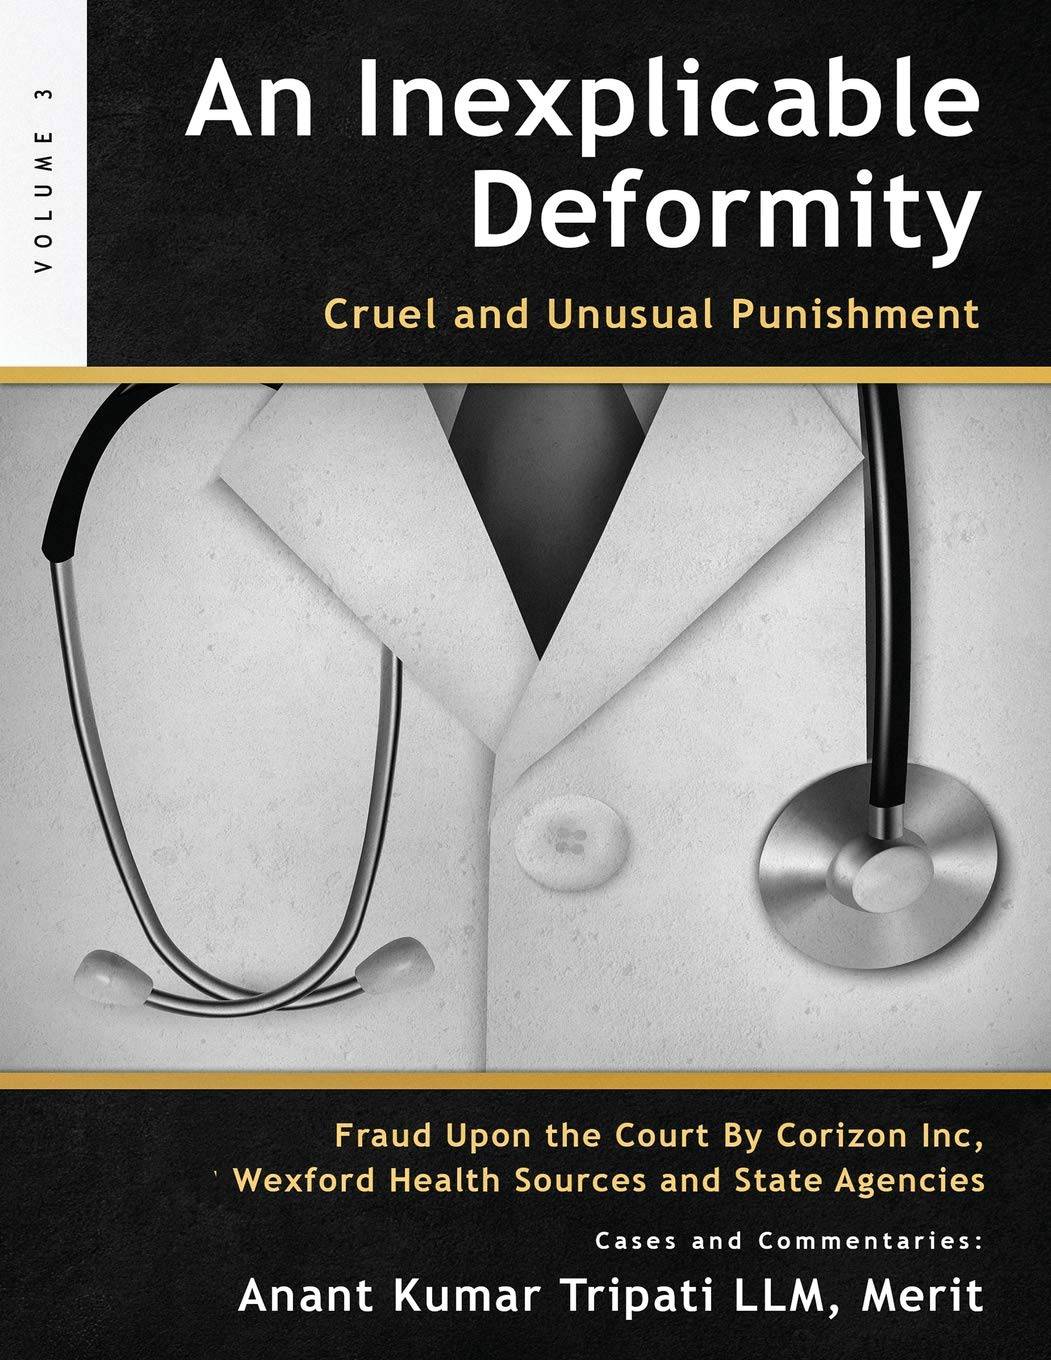 Inexplicable Deformity: Cruel and Unusual Punishment - SureShot Books Publishing LLC